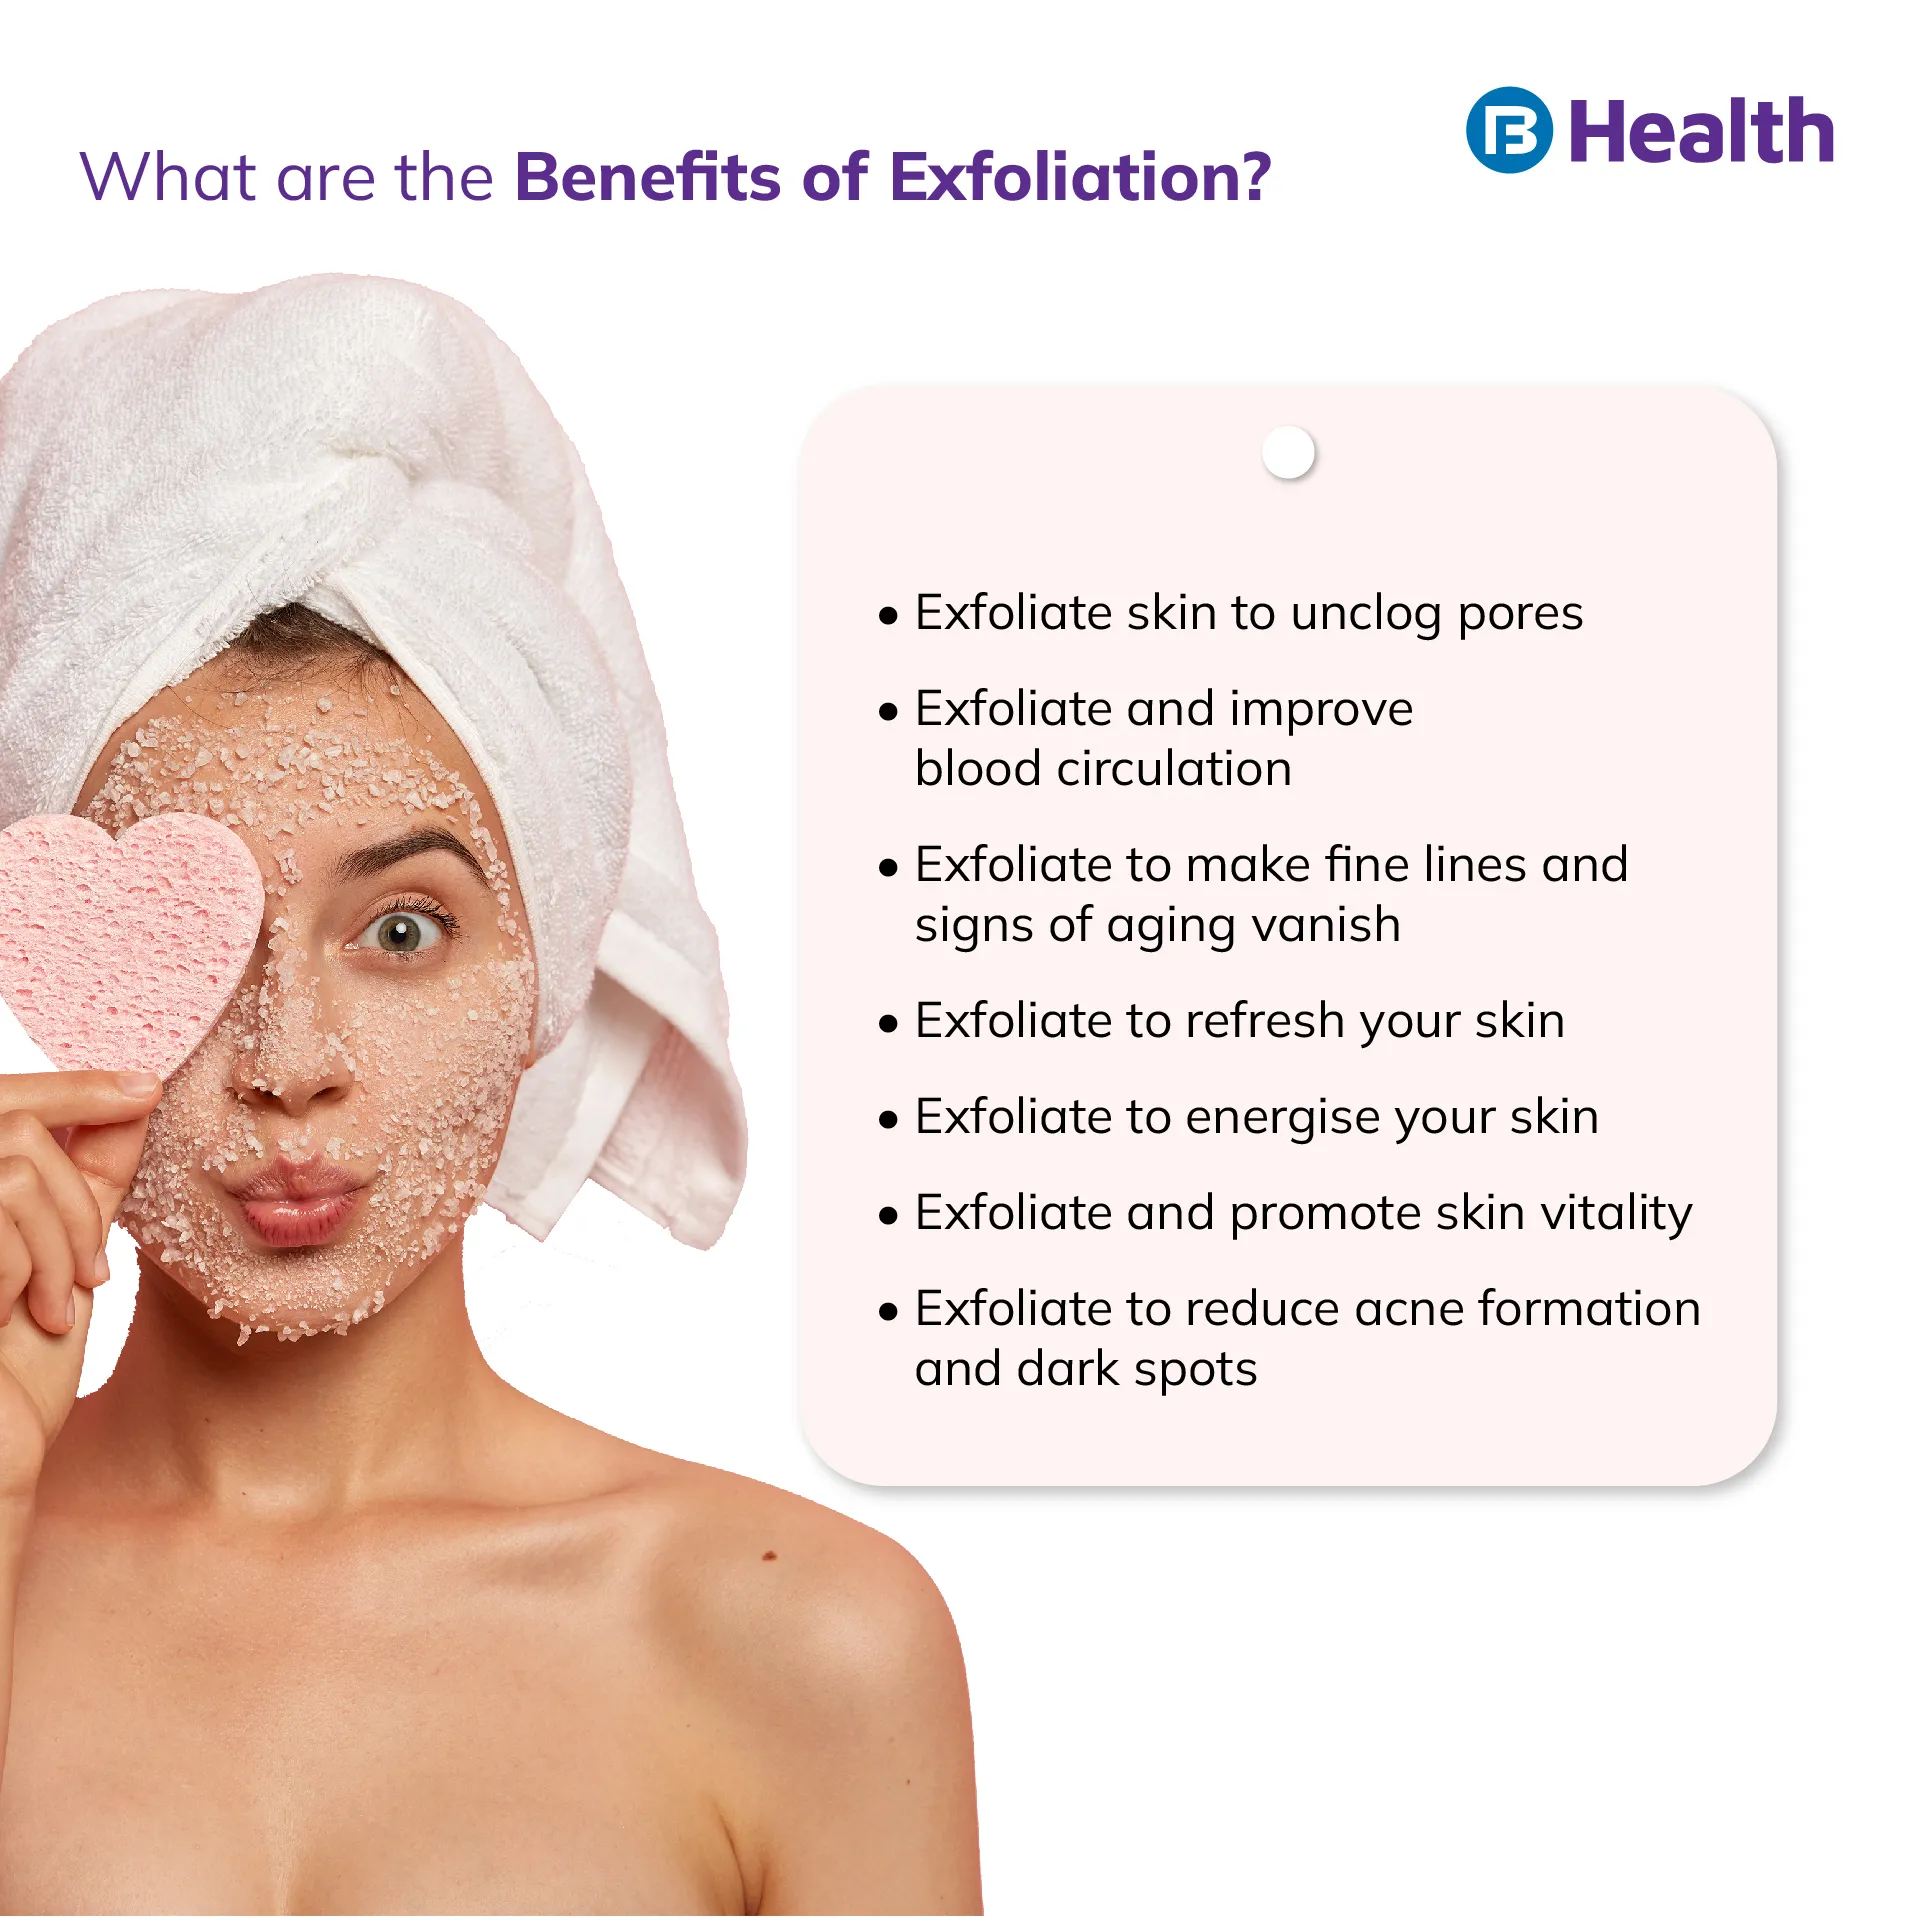 Exfoliate Skin benefits